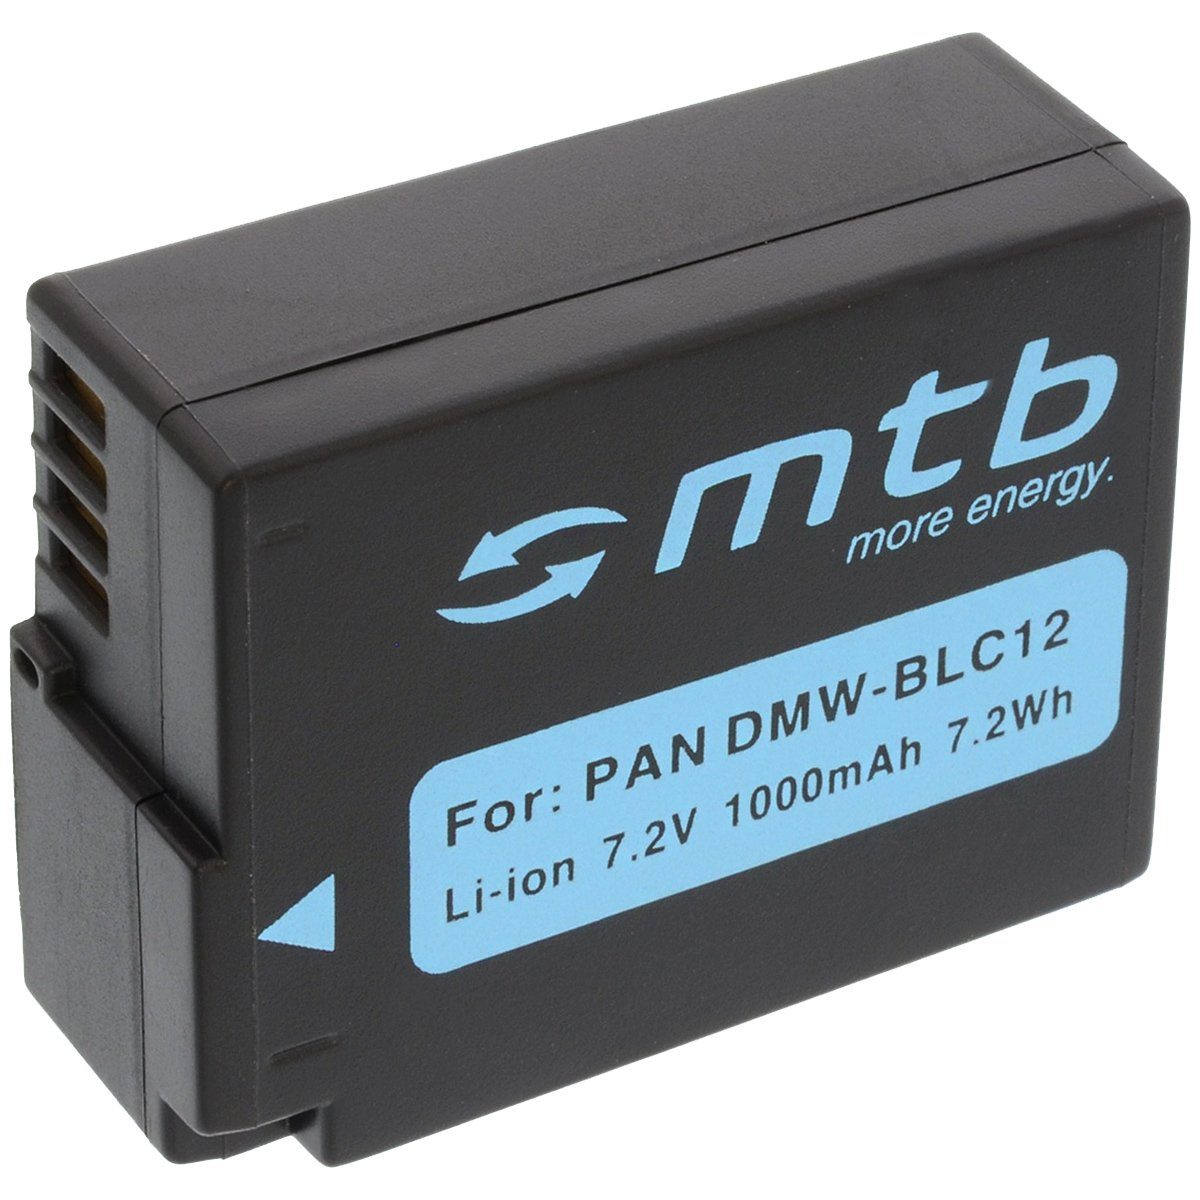 mtb more energy [BAT-262 - Li-Ion] Kamera-Akku kompatibel mit Akku-Typ Panasonic DMW-BLC12 1000 mAh (7,2 V), passend für: Panasonic Lumix DMC-FZ200, FZ300, FZ1000, FZ1000 II, FZ2000… | Akkus und PowerBanks